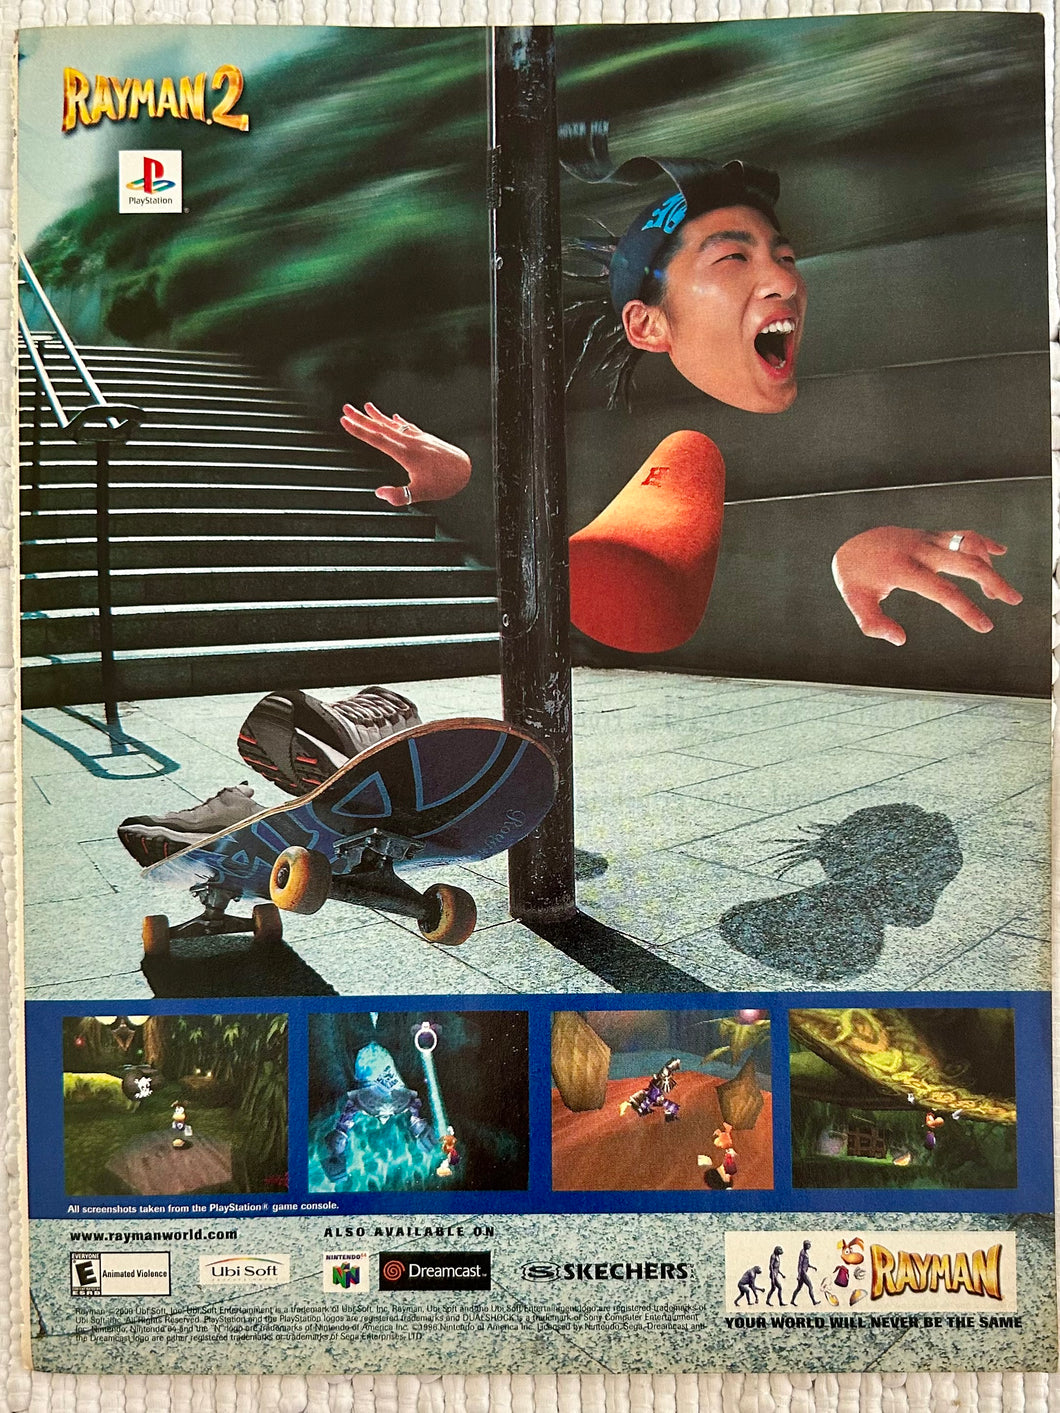 Rayman 2 - PlayStation Dreamcast N64 - Original Vintage Advertisement - Print Ads - Laminated A4 Poster